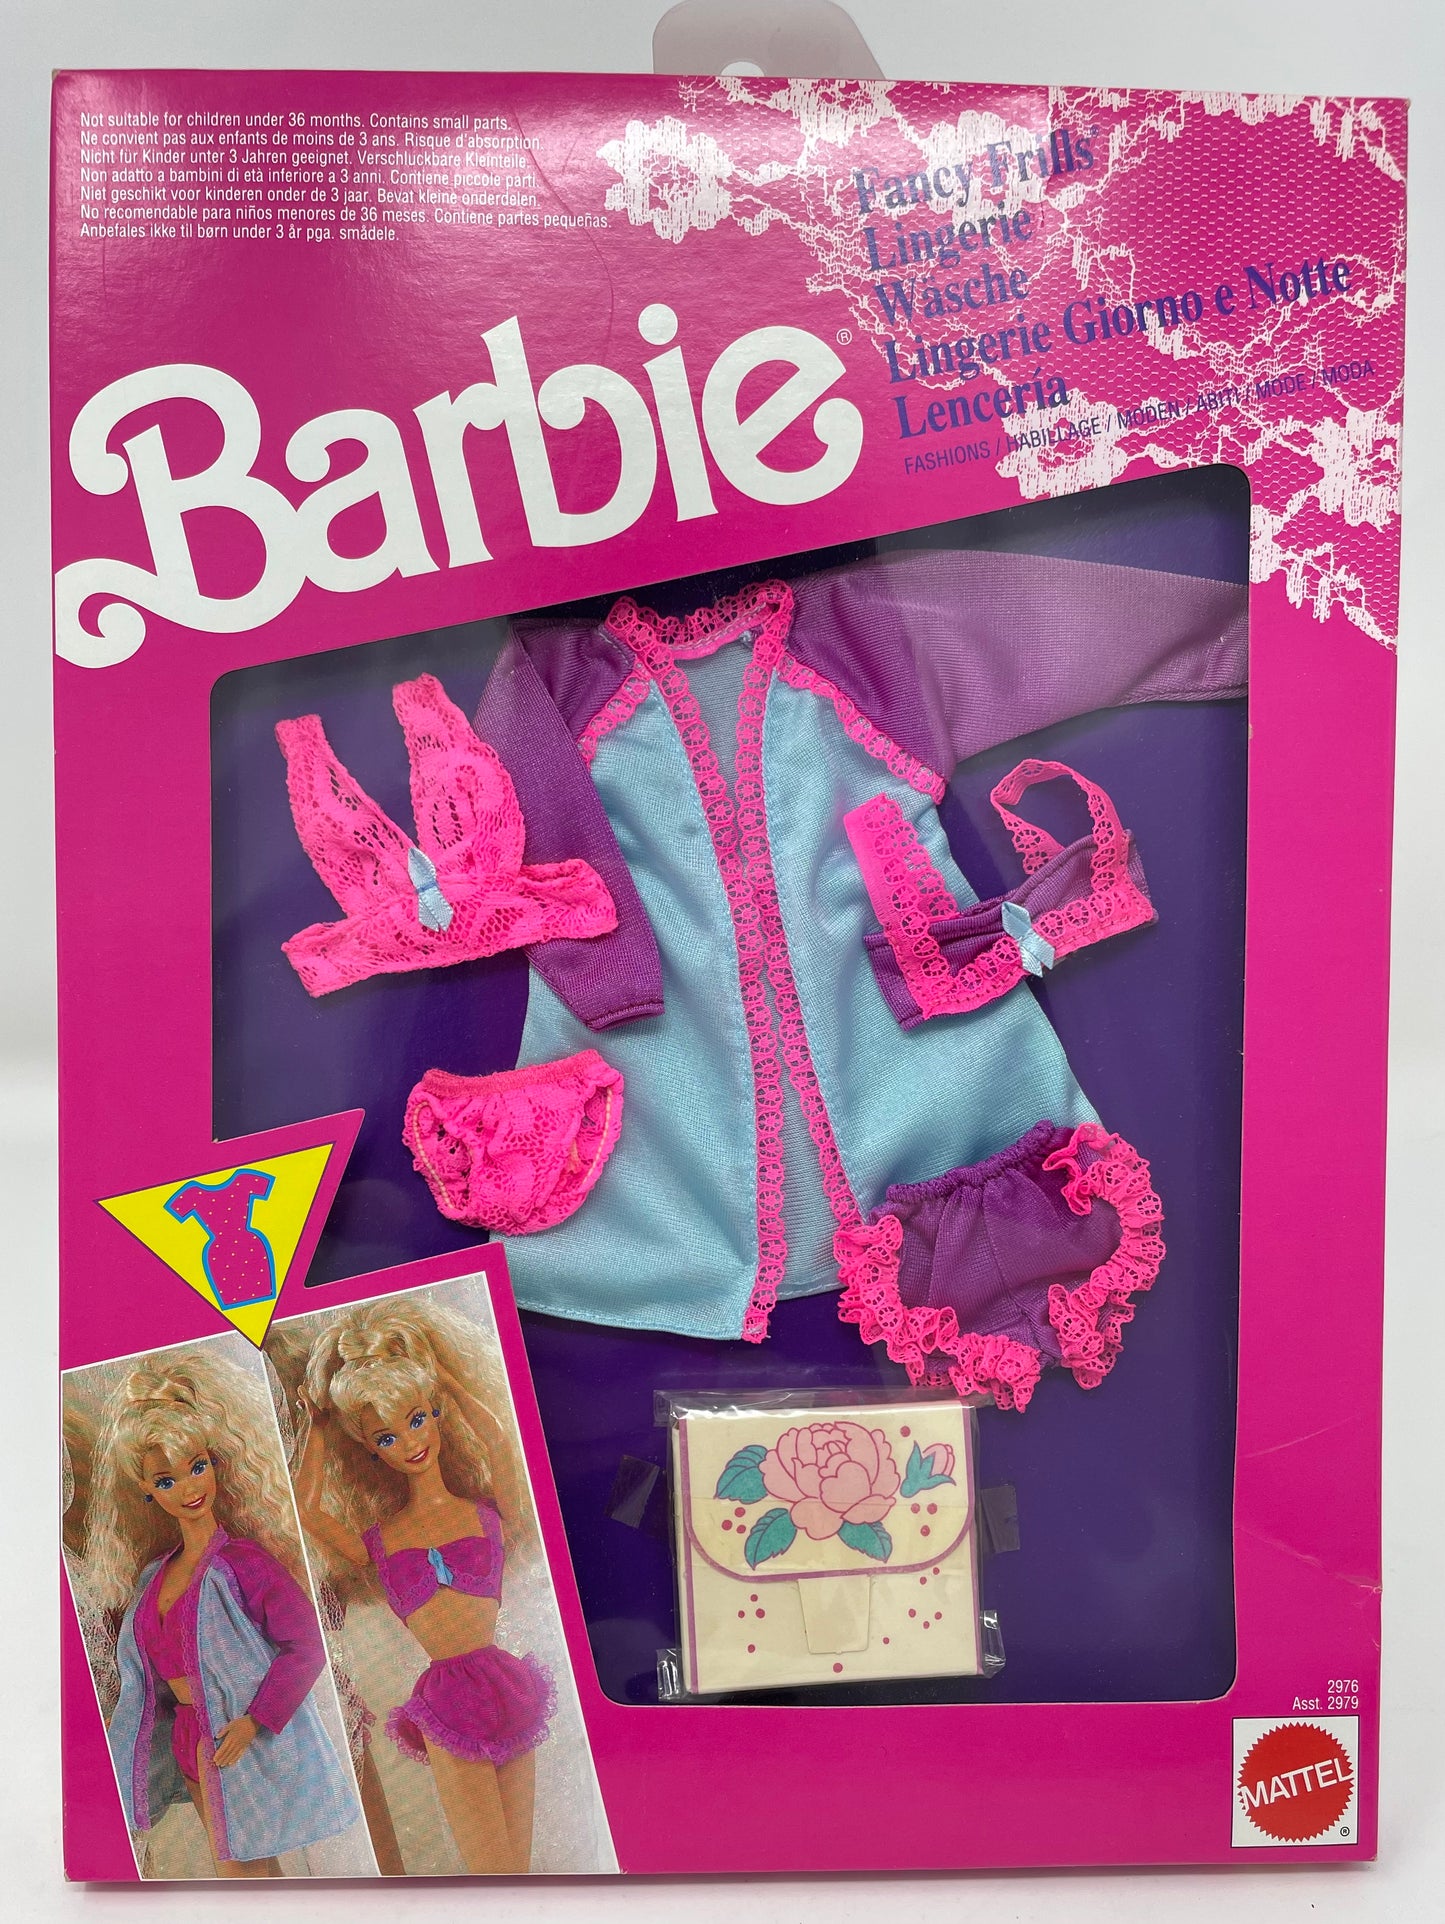 BARBIE - FANCY FRILLS FASHIONS - PINK/PURPLE/AQUA - TWO LINGERIE LOOKS - BOXED #2976 - MATTEL 1991